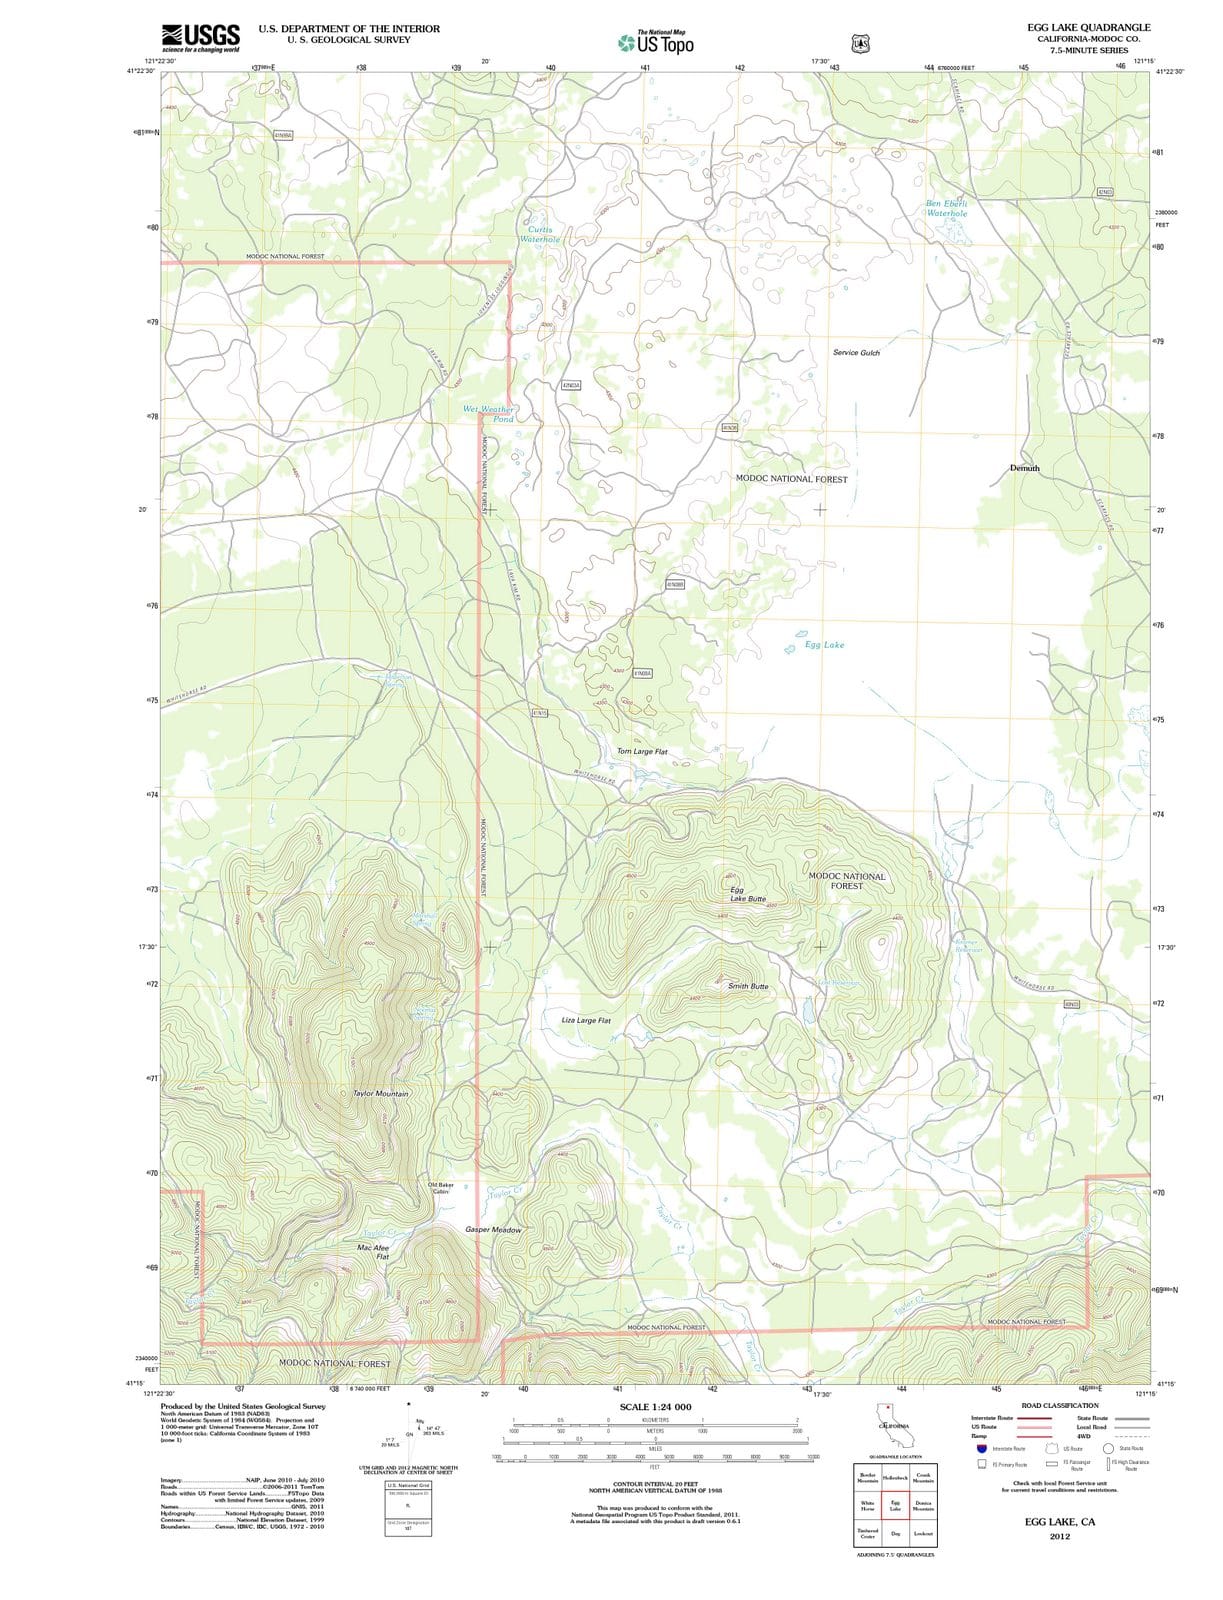 2012 Egg Lake, CA - California - USGS Topographic Map